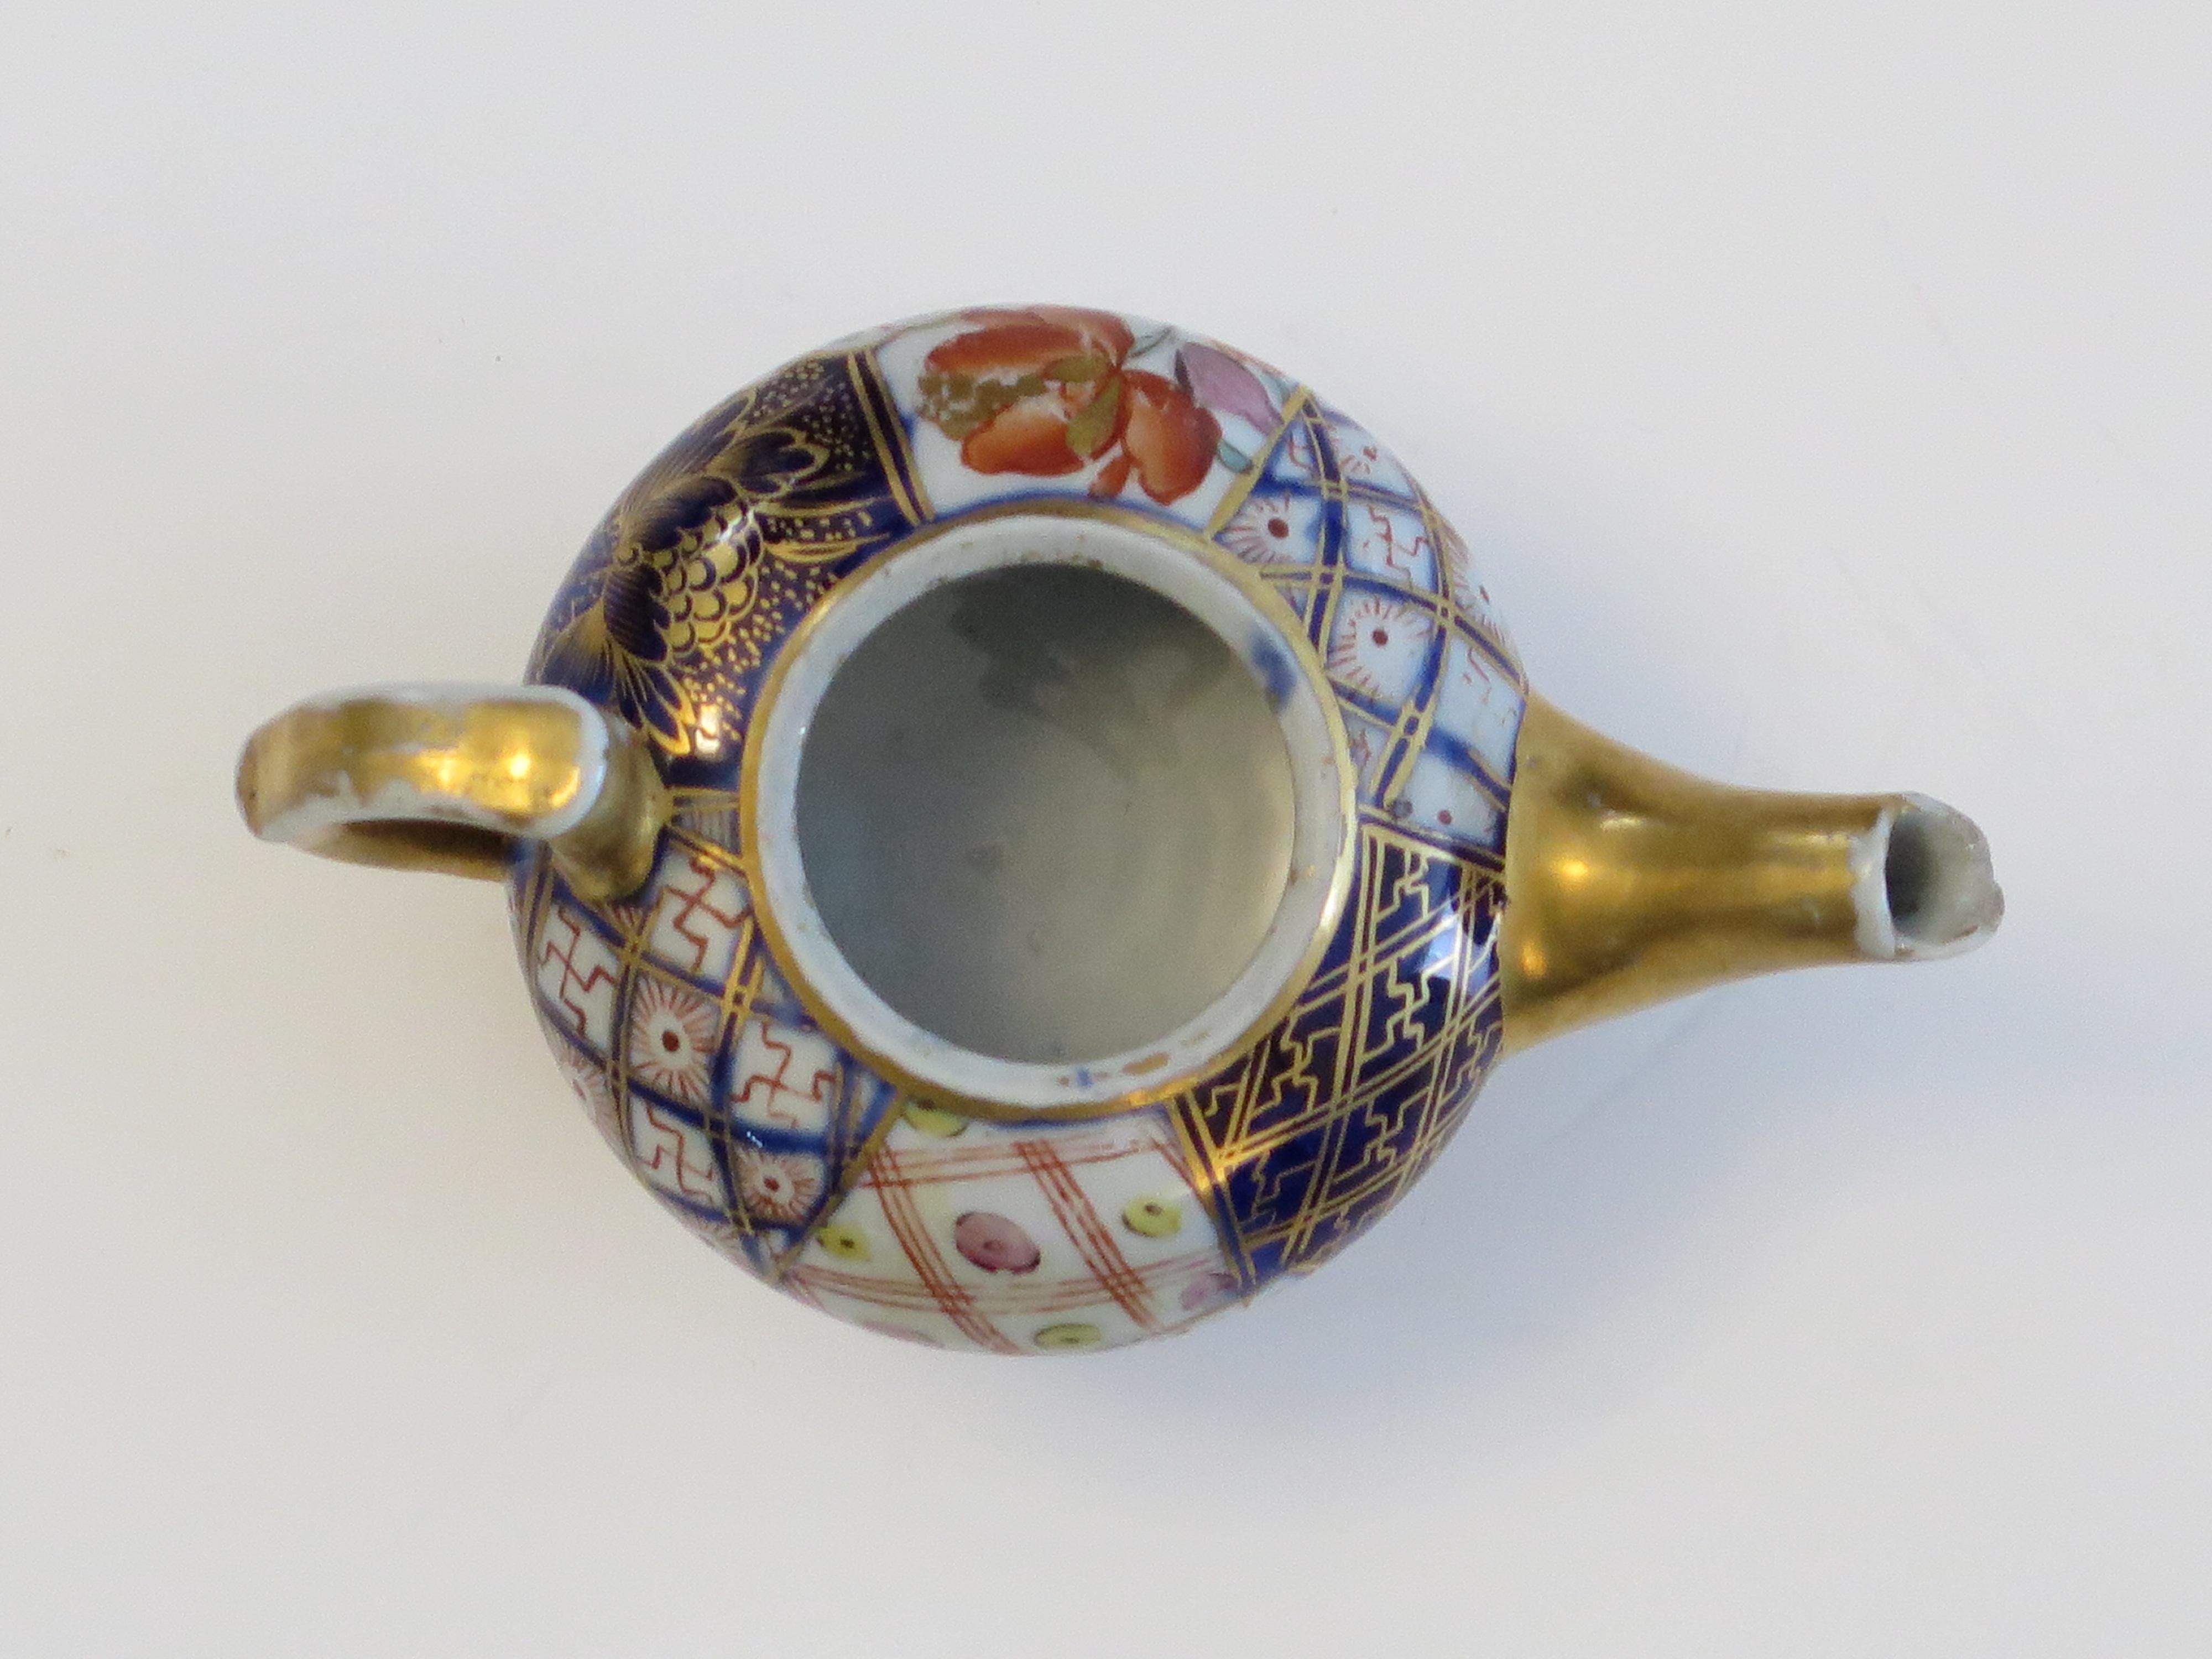 Rare Mason's Ironstone Miniature Teapot in Plaid Japan rare Pattern, circa 1820 For Sale 8